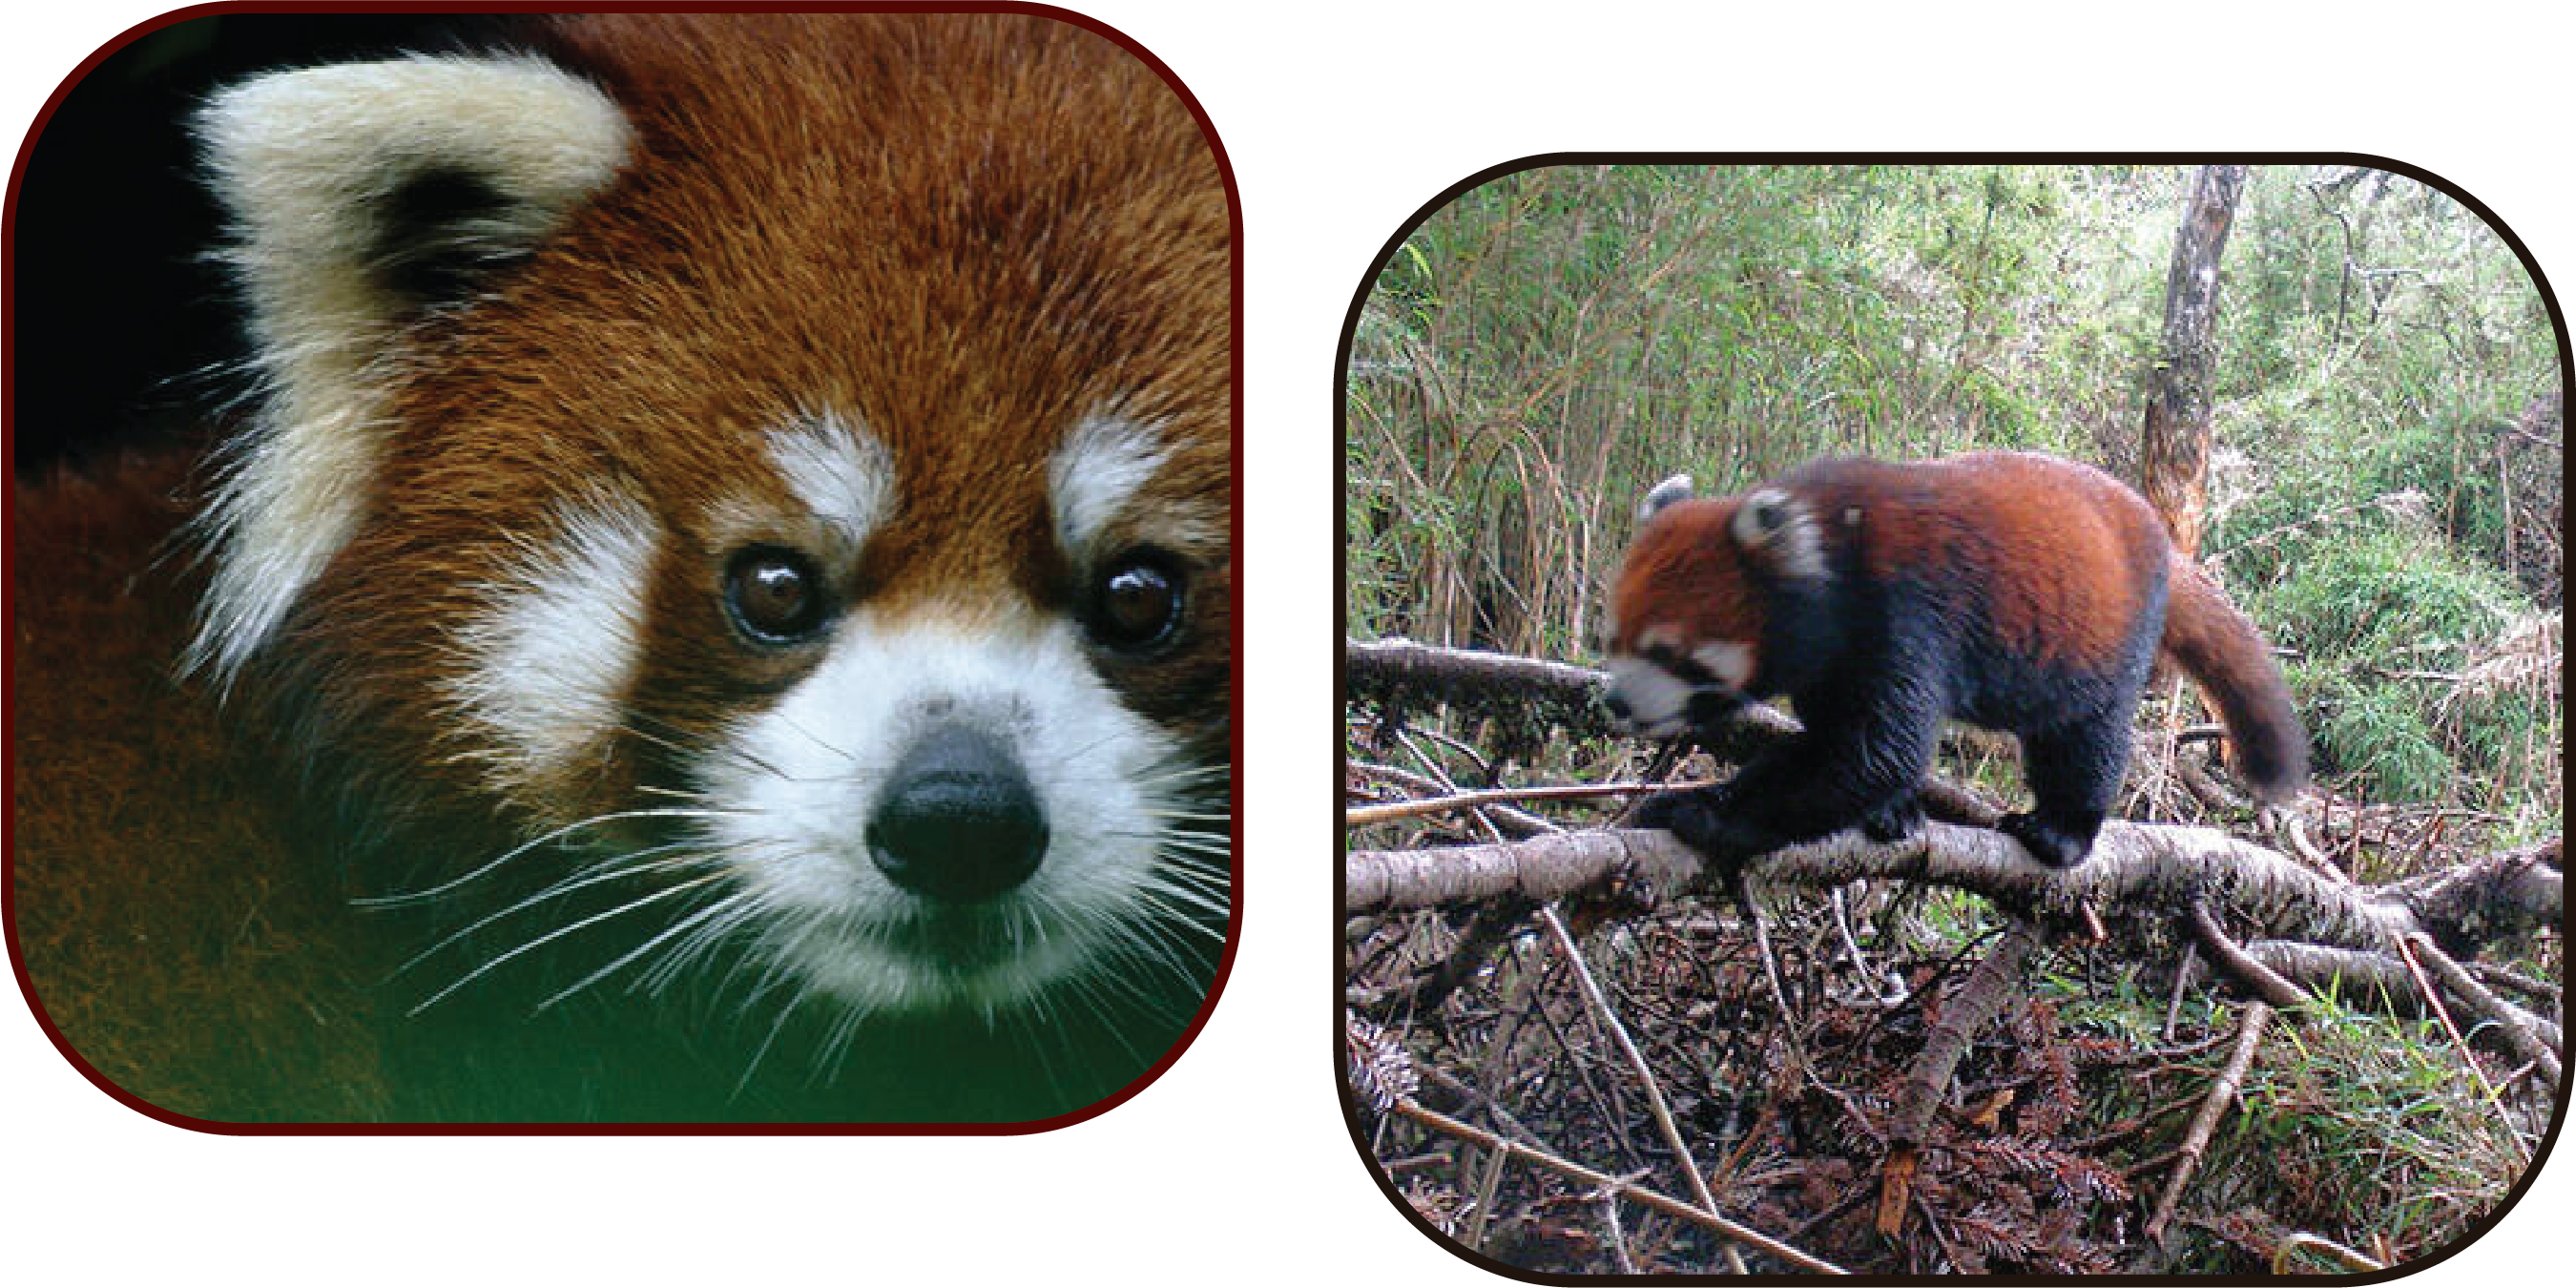 Habitat of Red Pandas